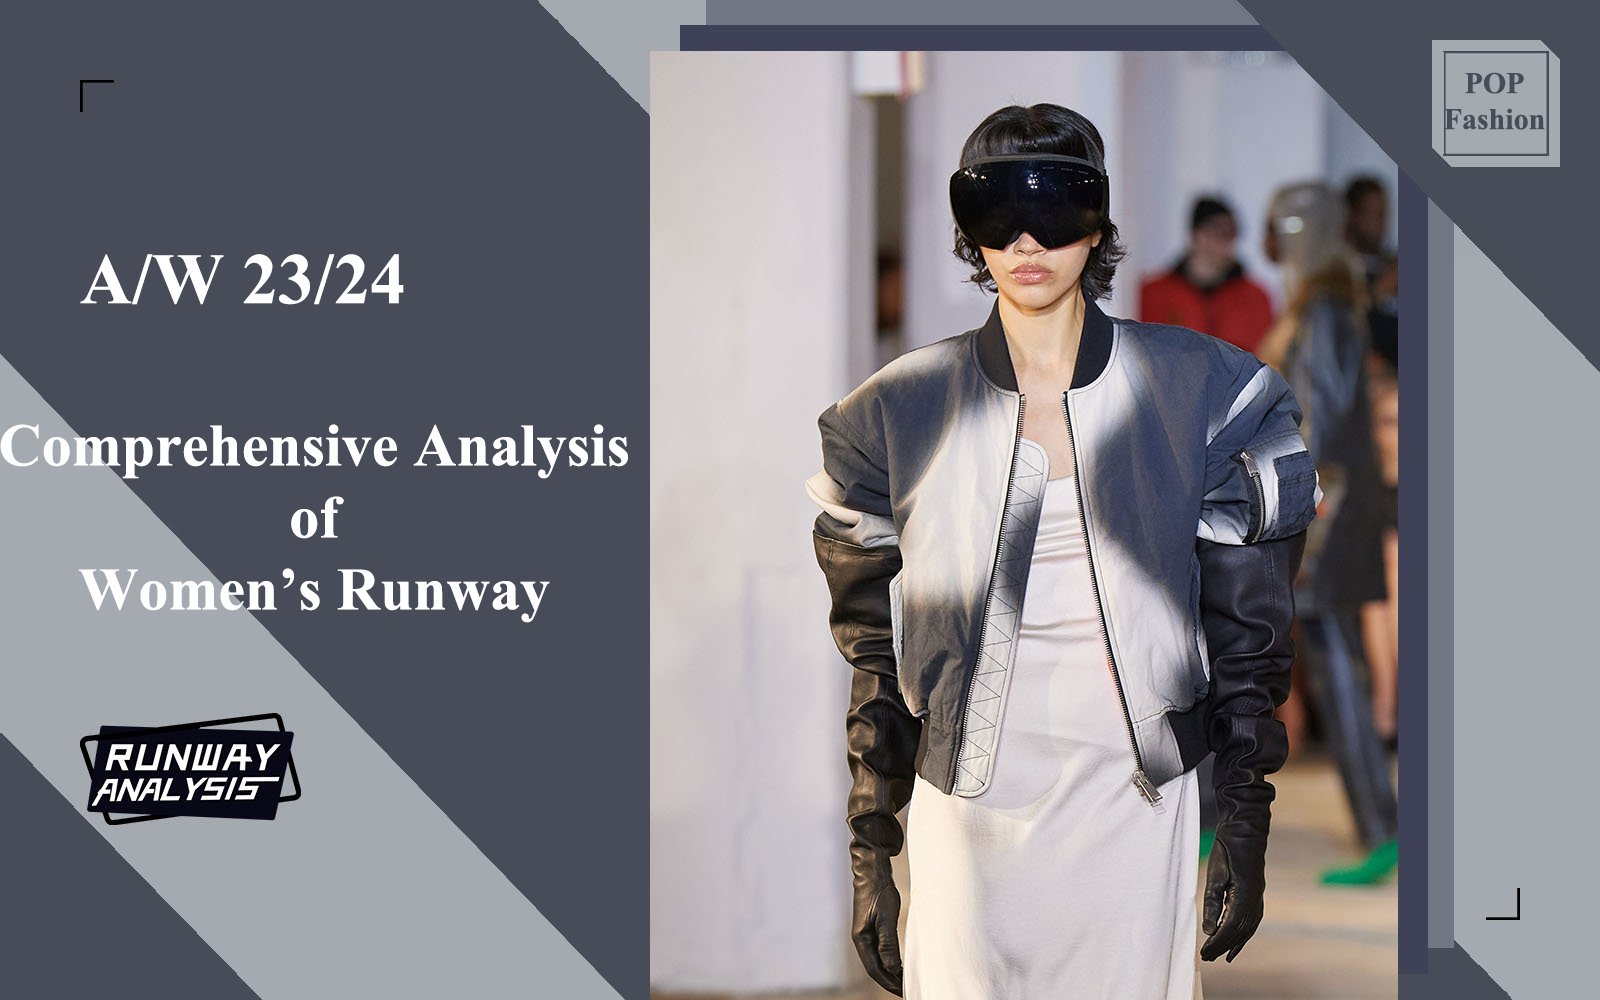 Outerwear -- A/W 23/24 Comprehensive Womenswear Runway Analysis